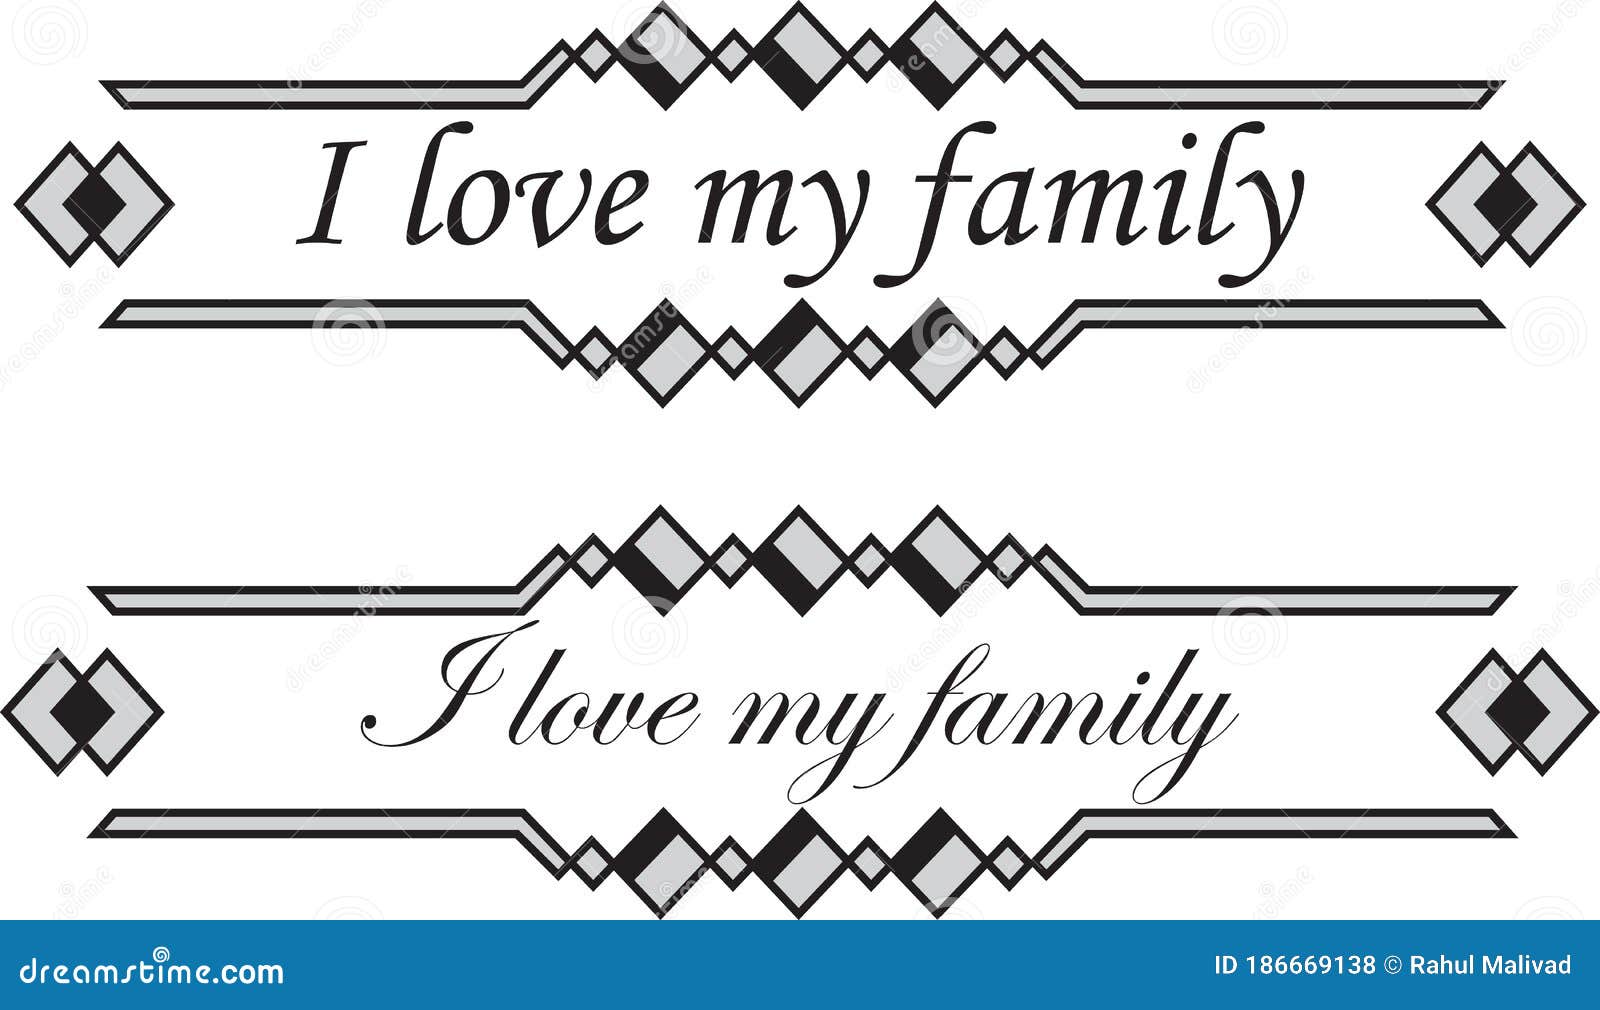 I love my family text  stock vector Illustration of 